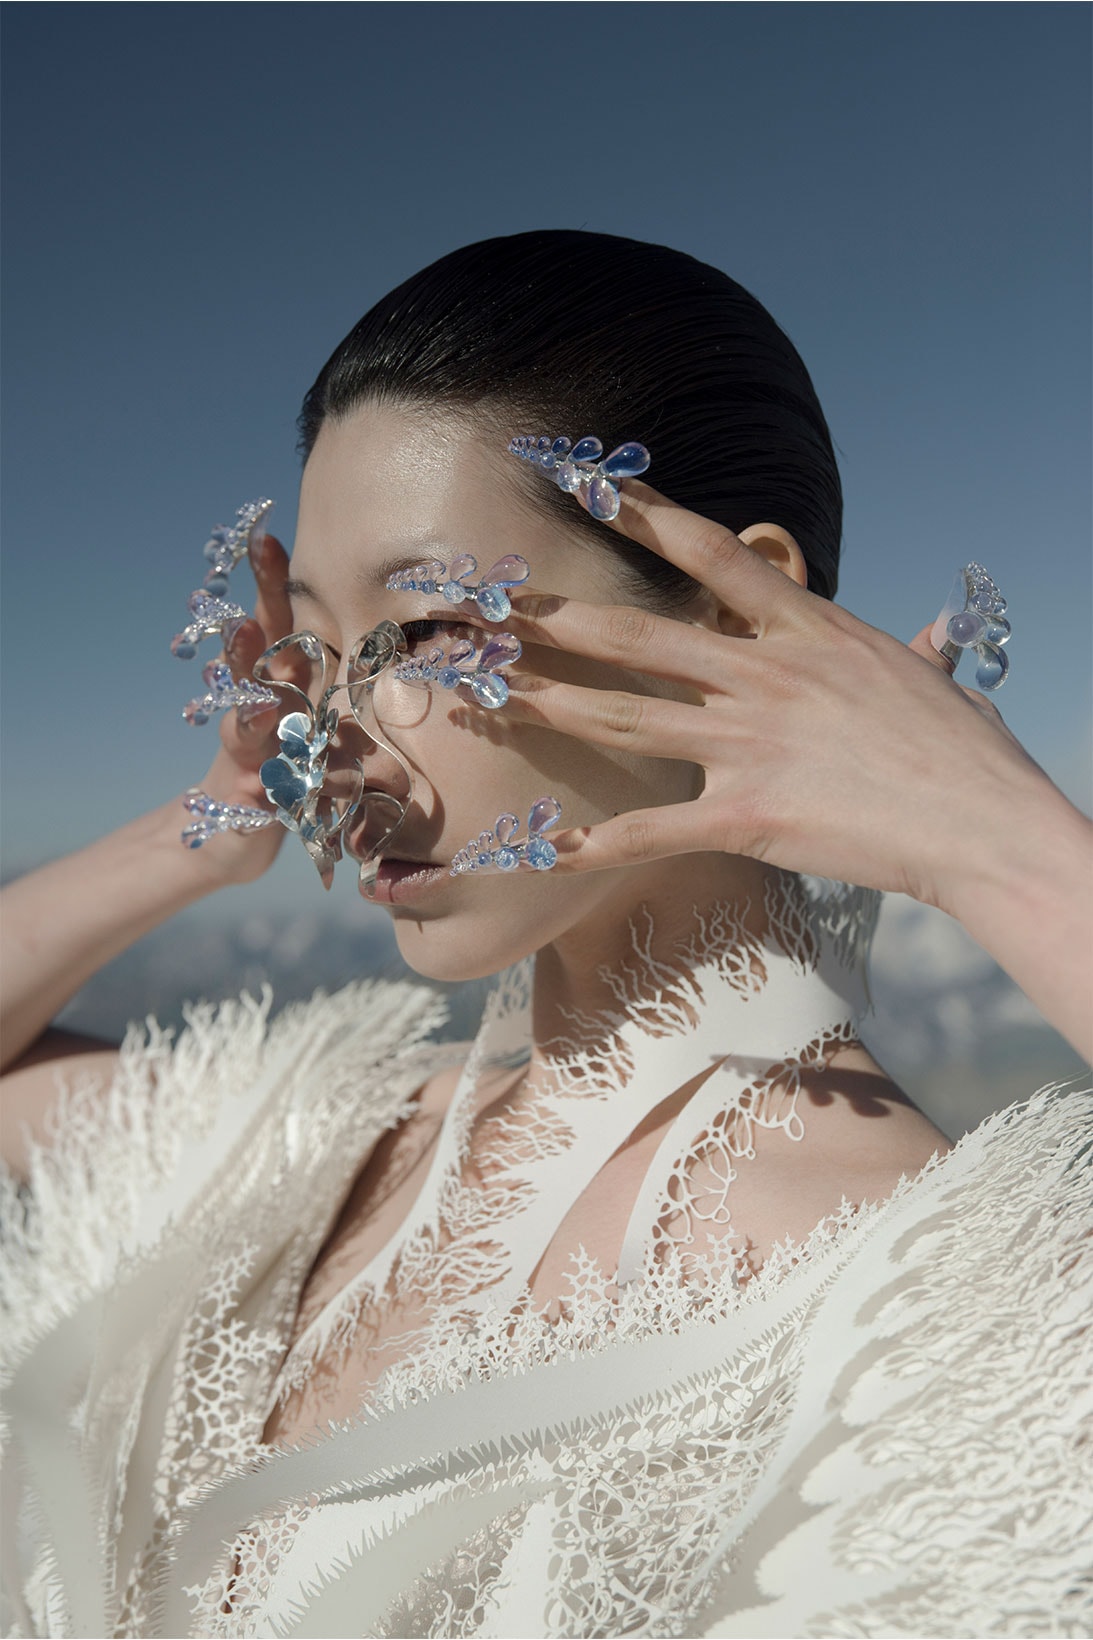 parley iris van herpen earthrise haute couture collaboration nails dress makeup